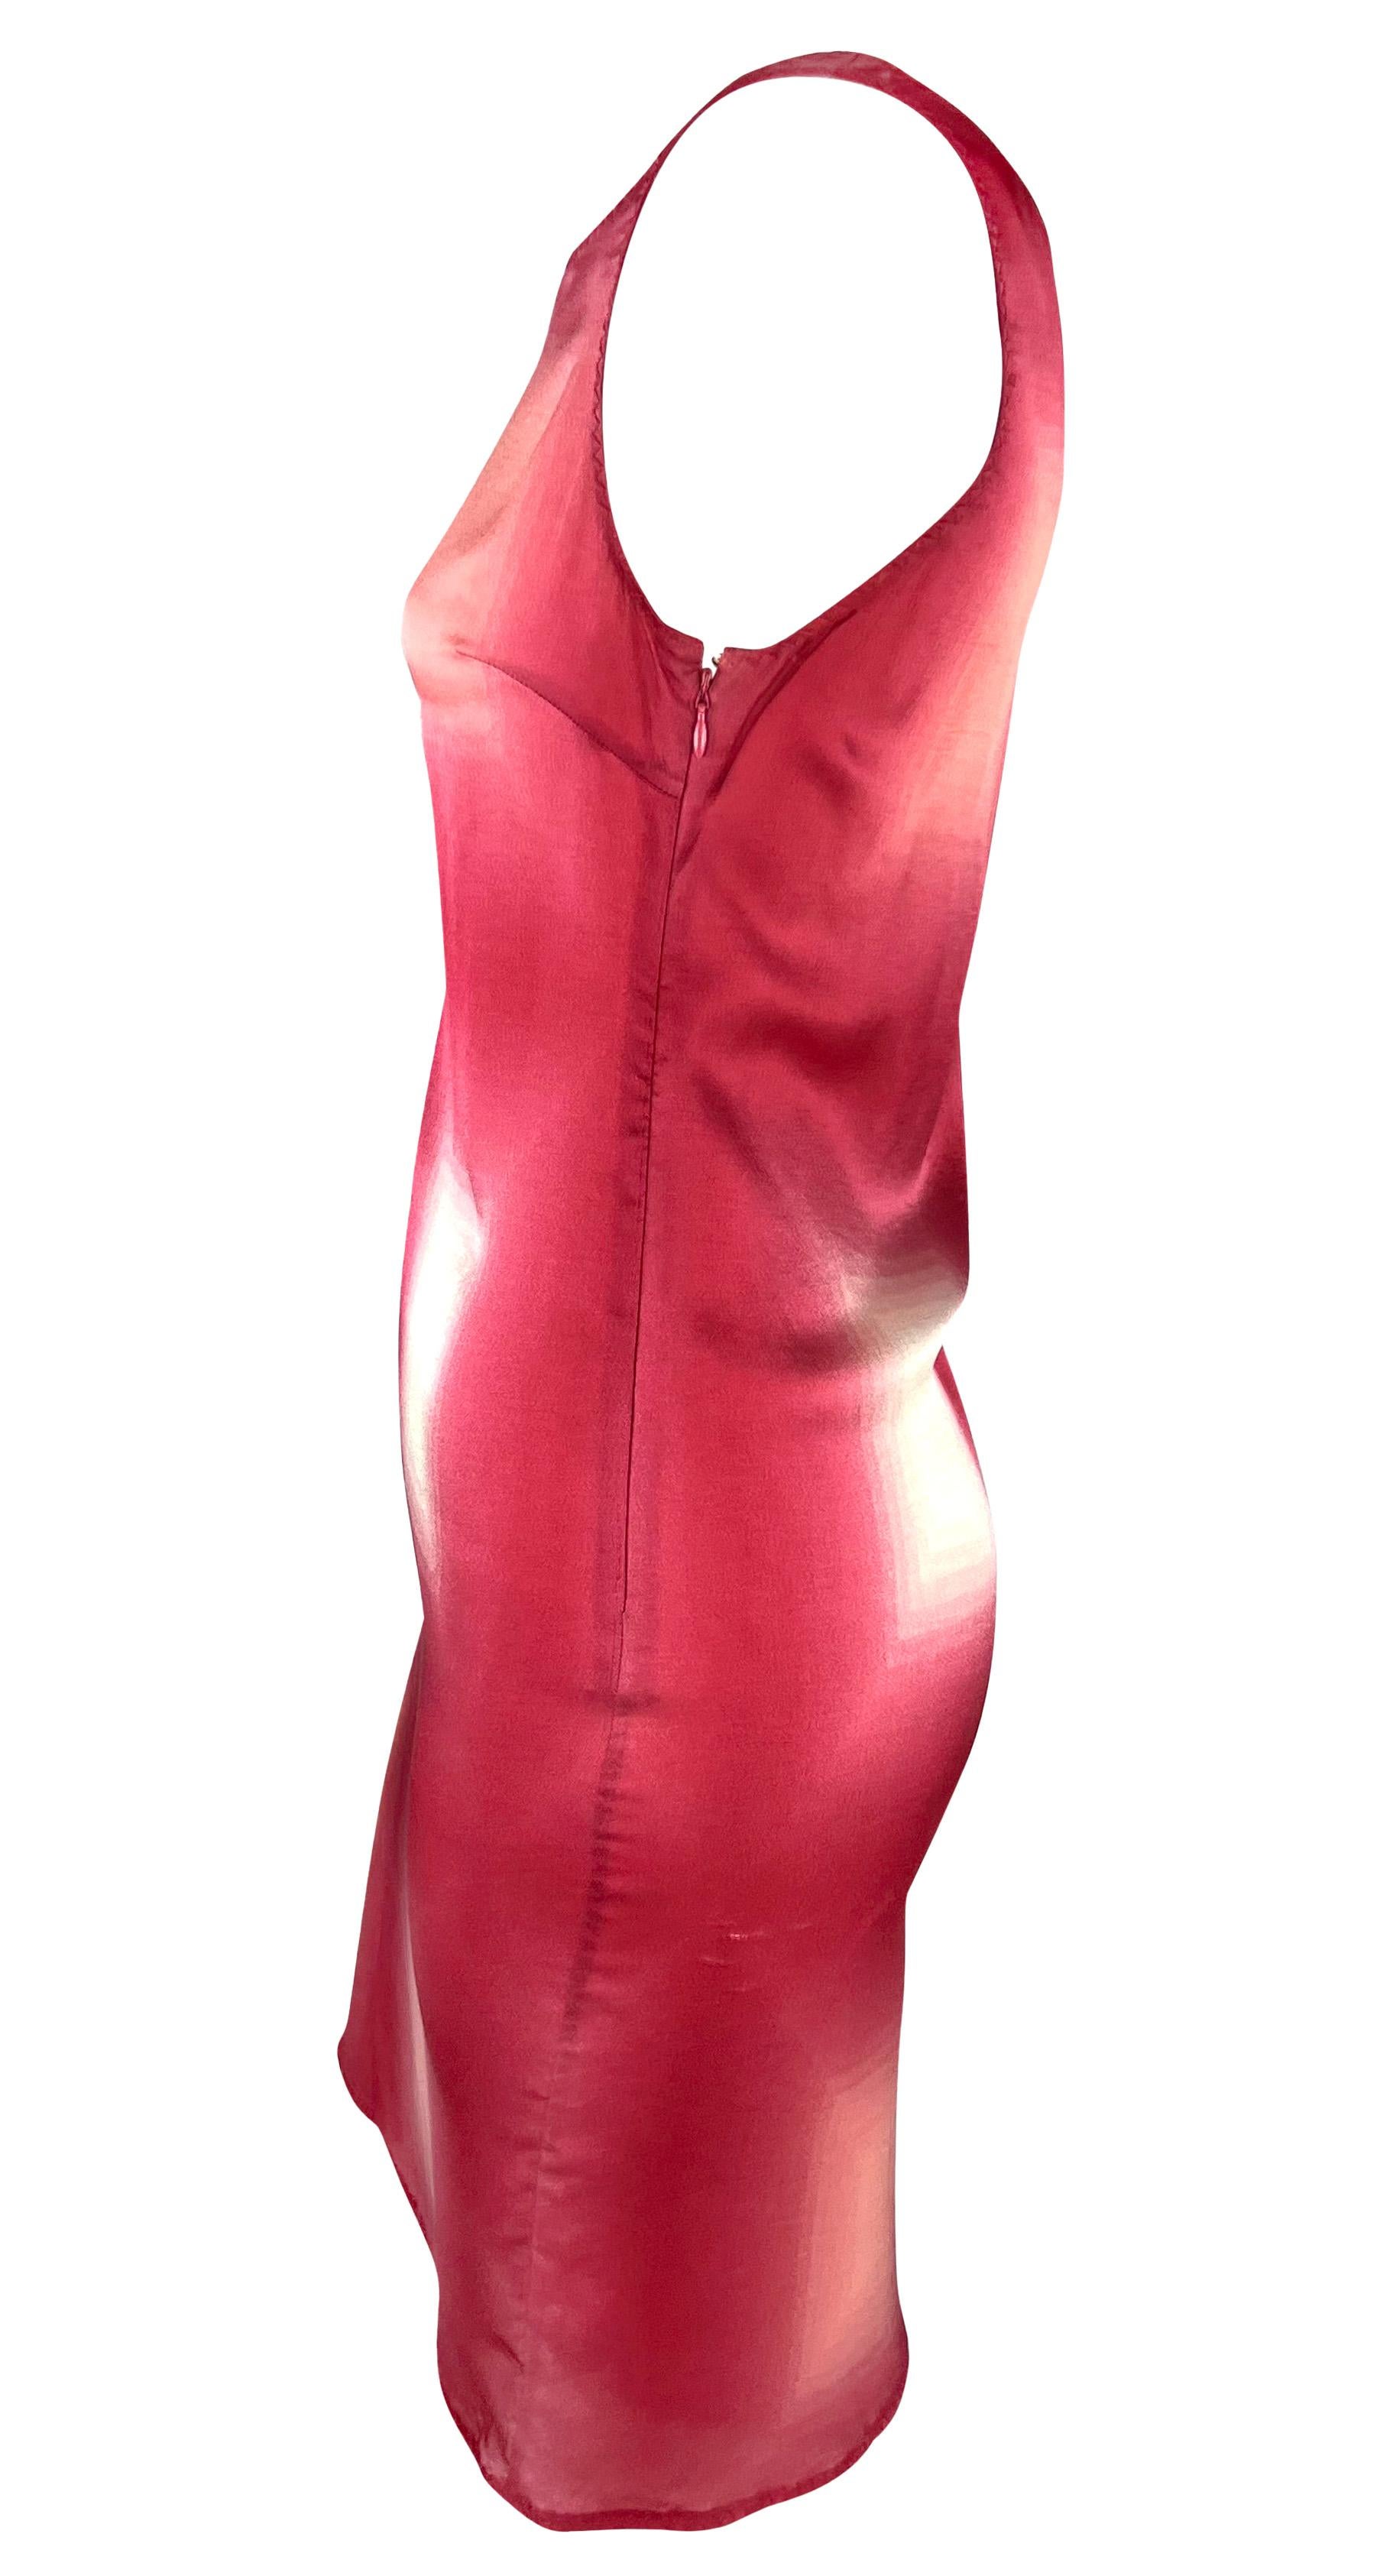 S/S 1998 Prada Red Geometric Ombré Sheer Sleeveless Dress For Sale 1